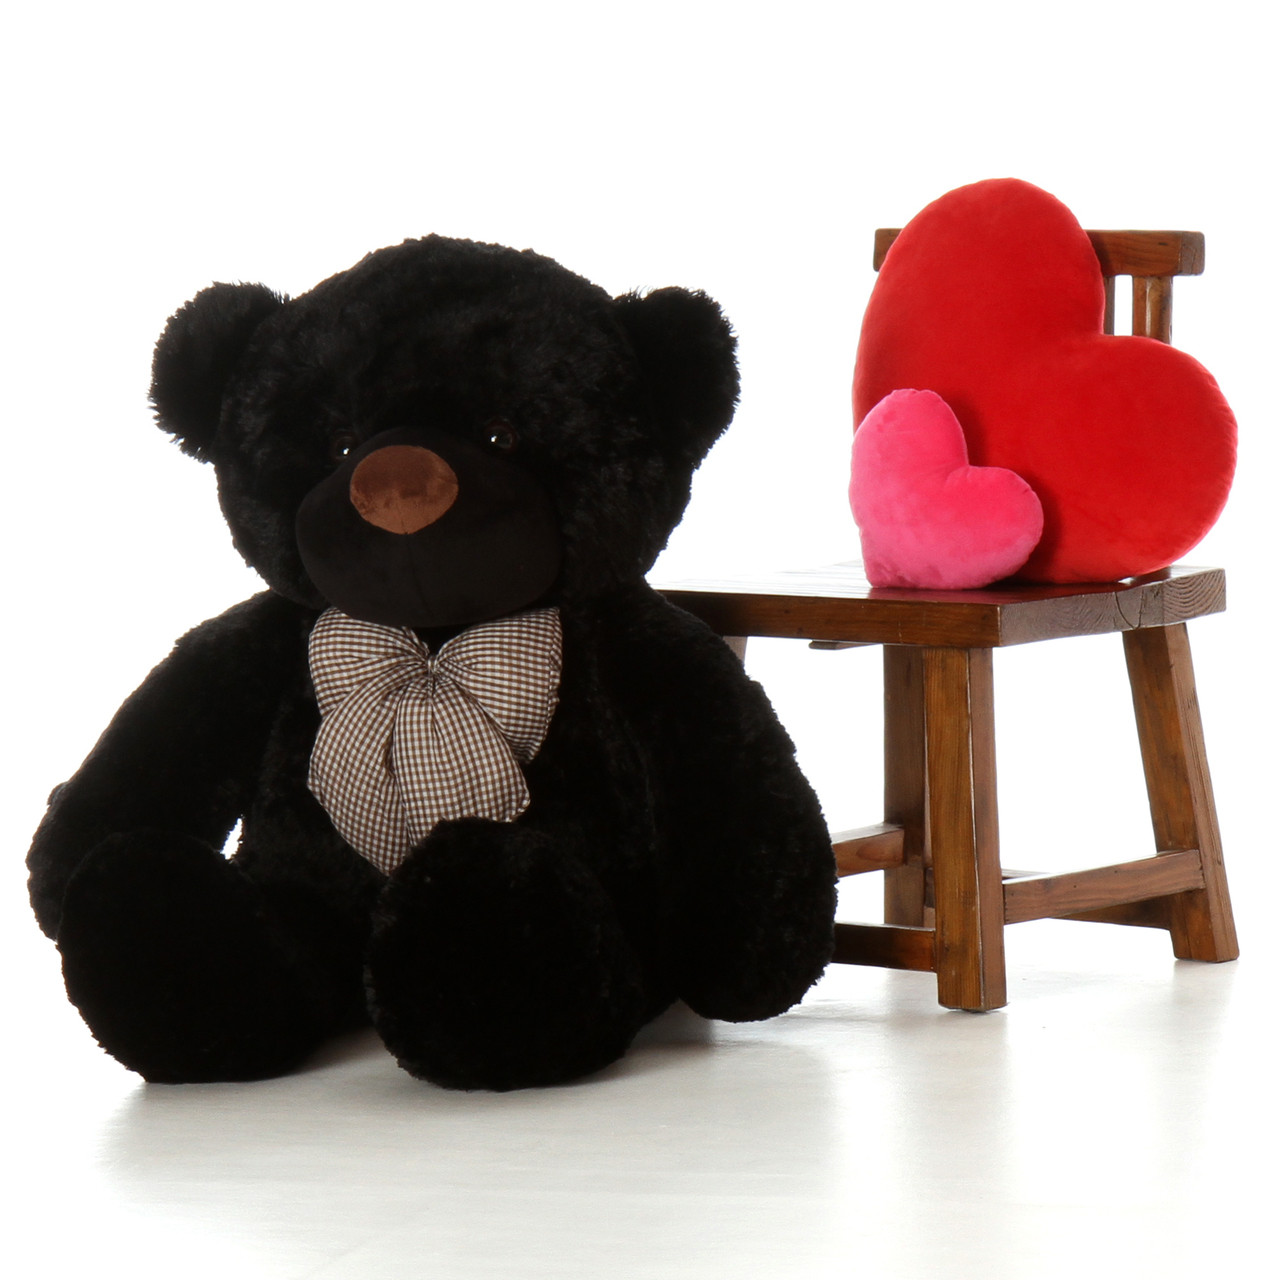 4ft Life Size Teddy Bear Juju Cuddles soft and huggable black fur